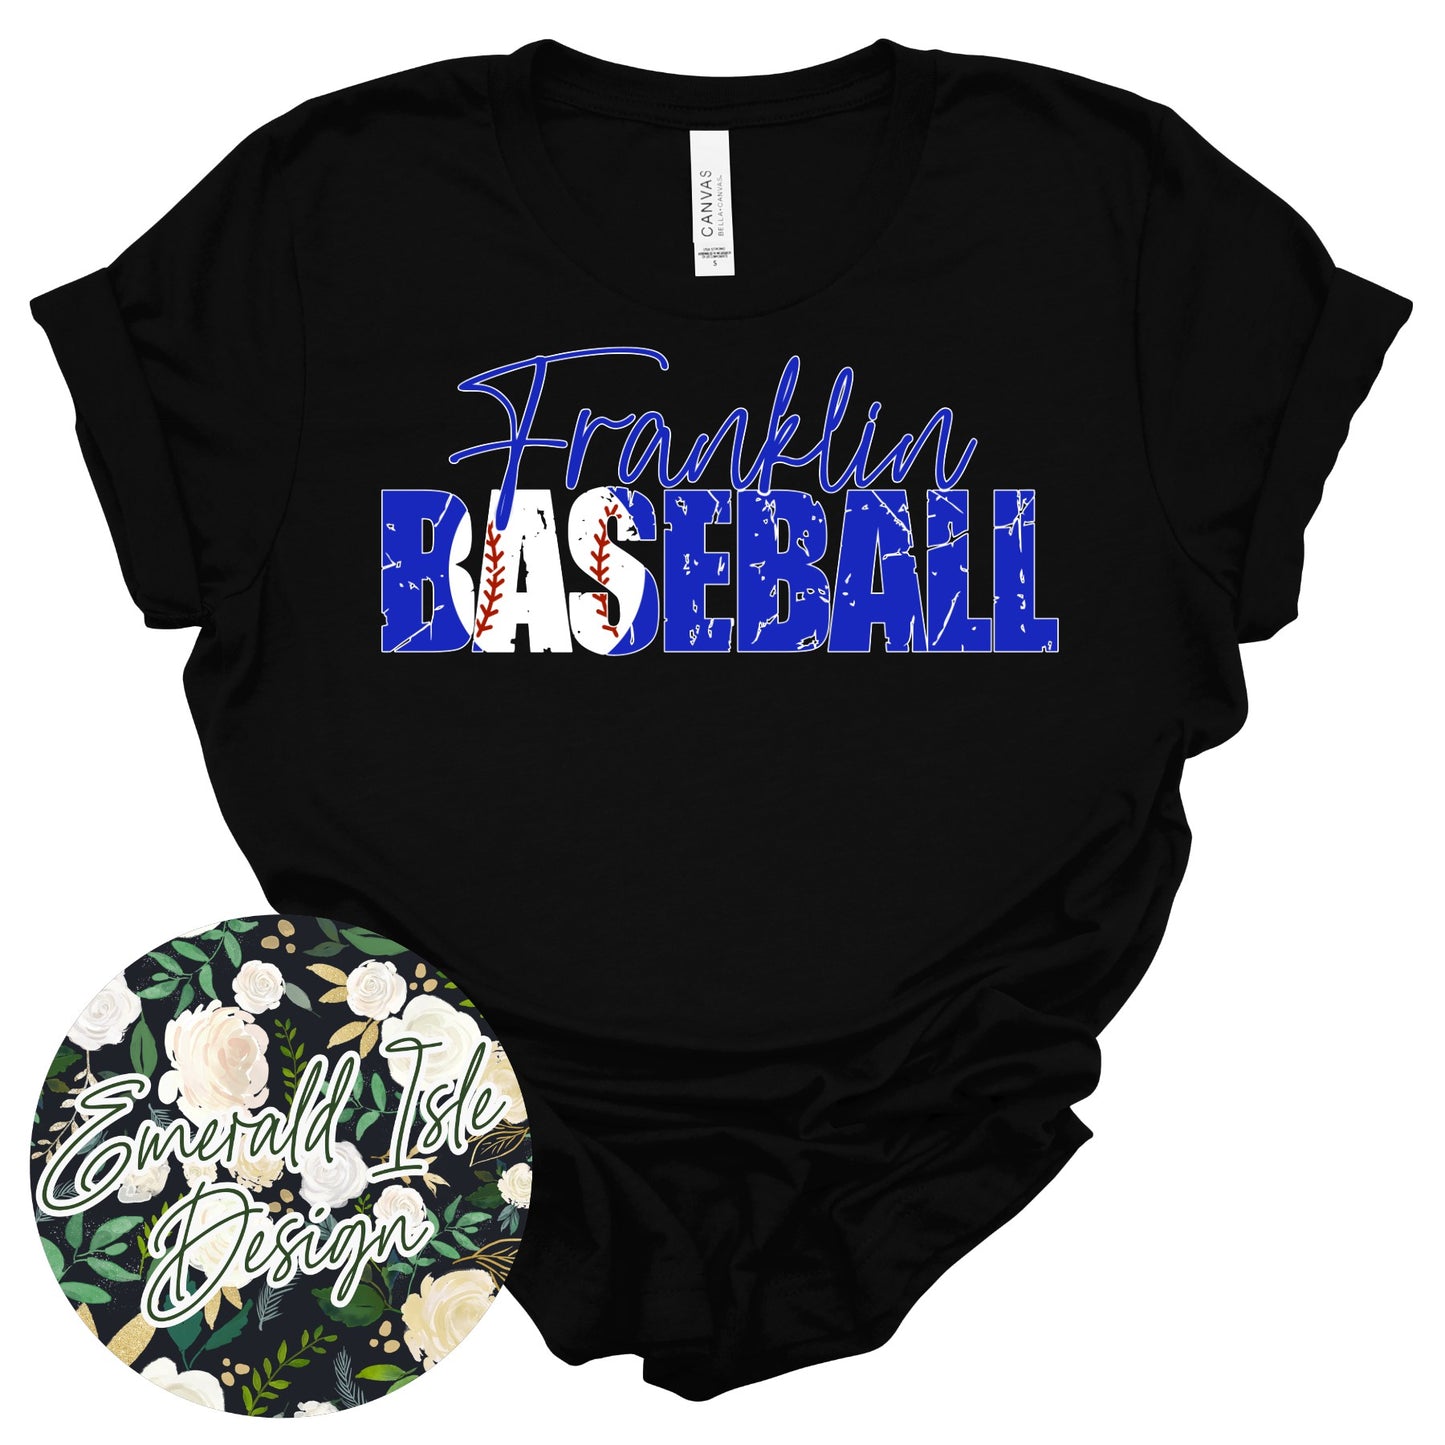 Franklin Distressed Baseball Design